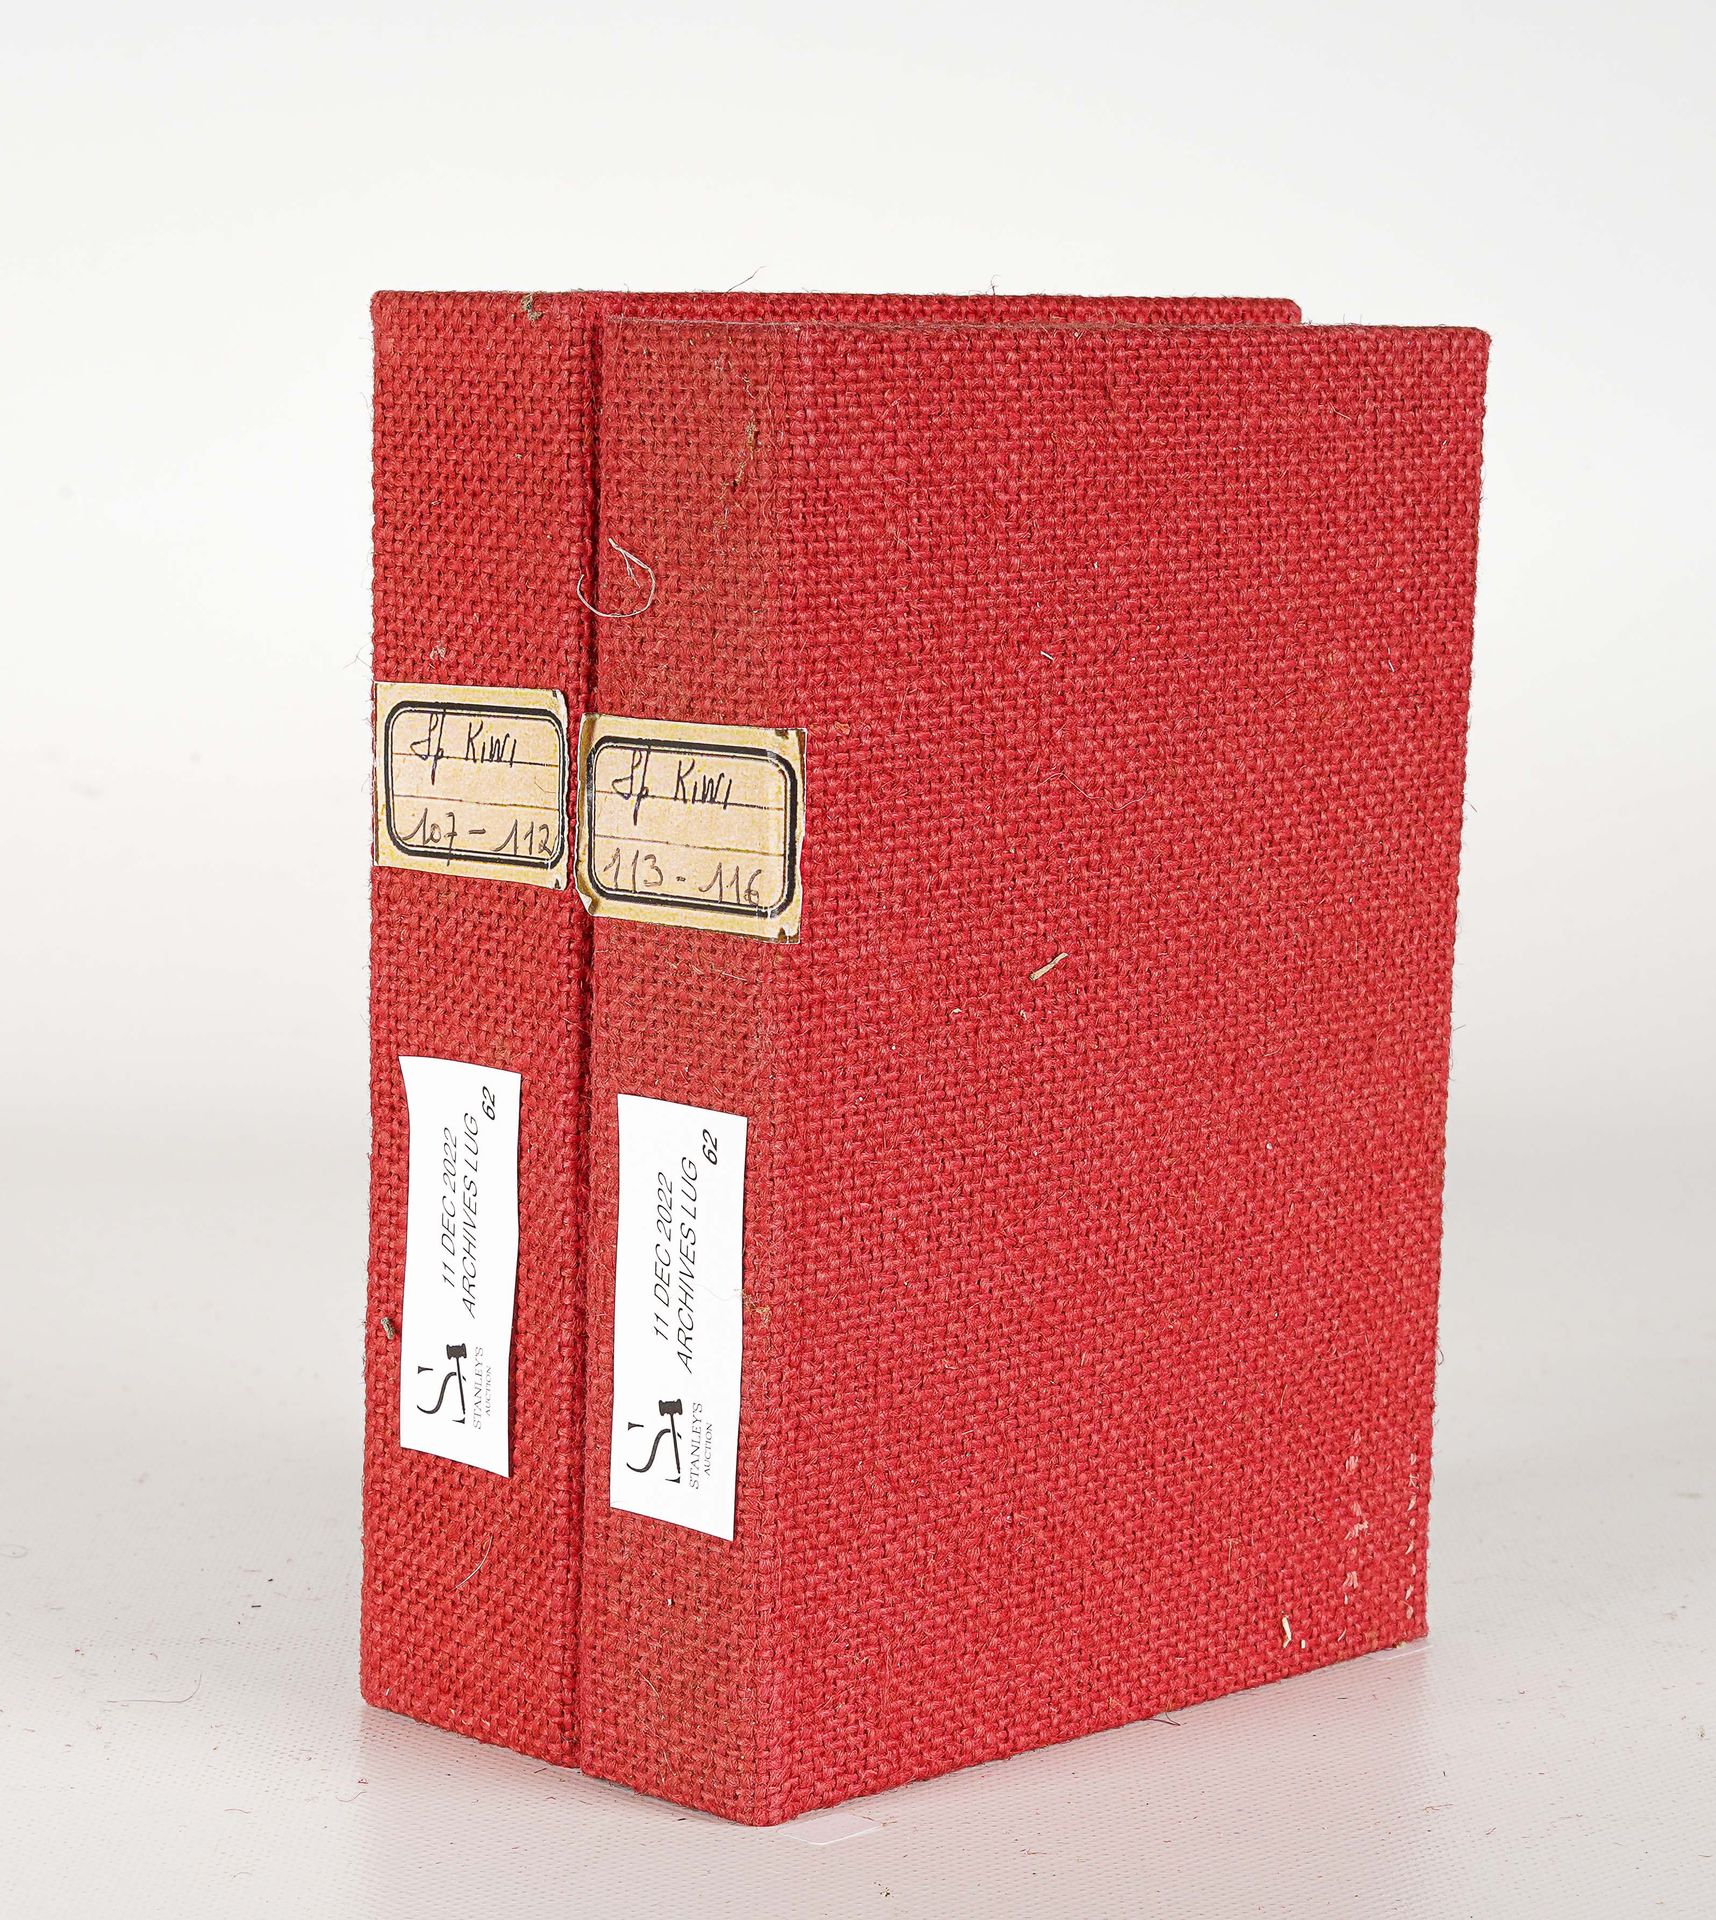 LUG SEMIC, ARCHIVES COMICS 两个装有KIWI特刊的LUG活页夹，编号107至116，红布，尺寸为H 18 x 13,5 cm